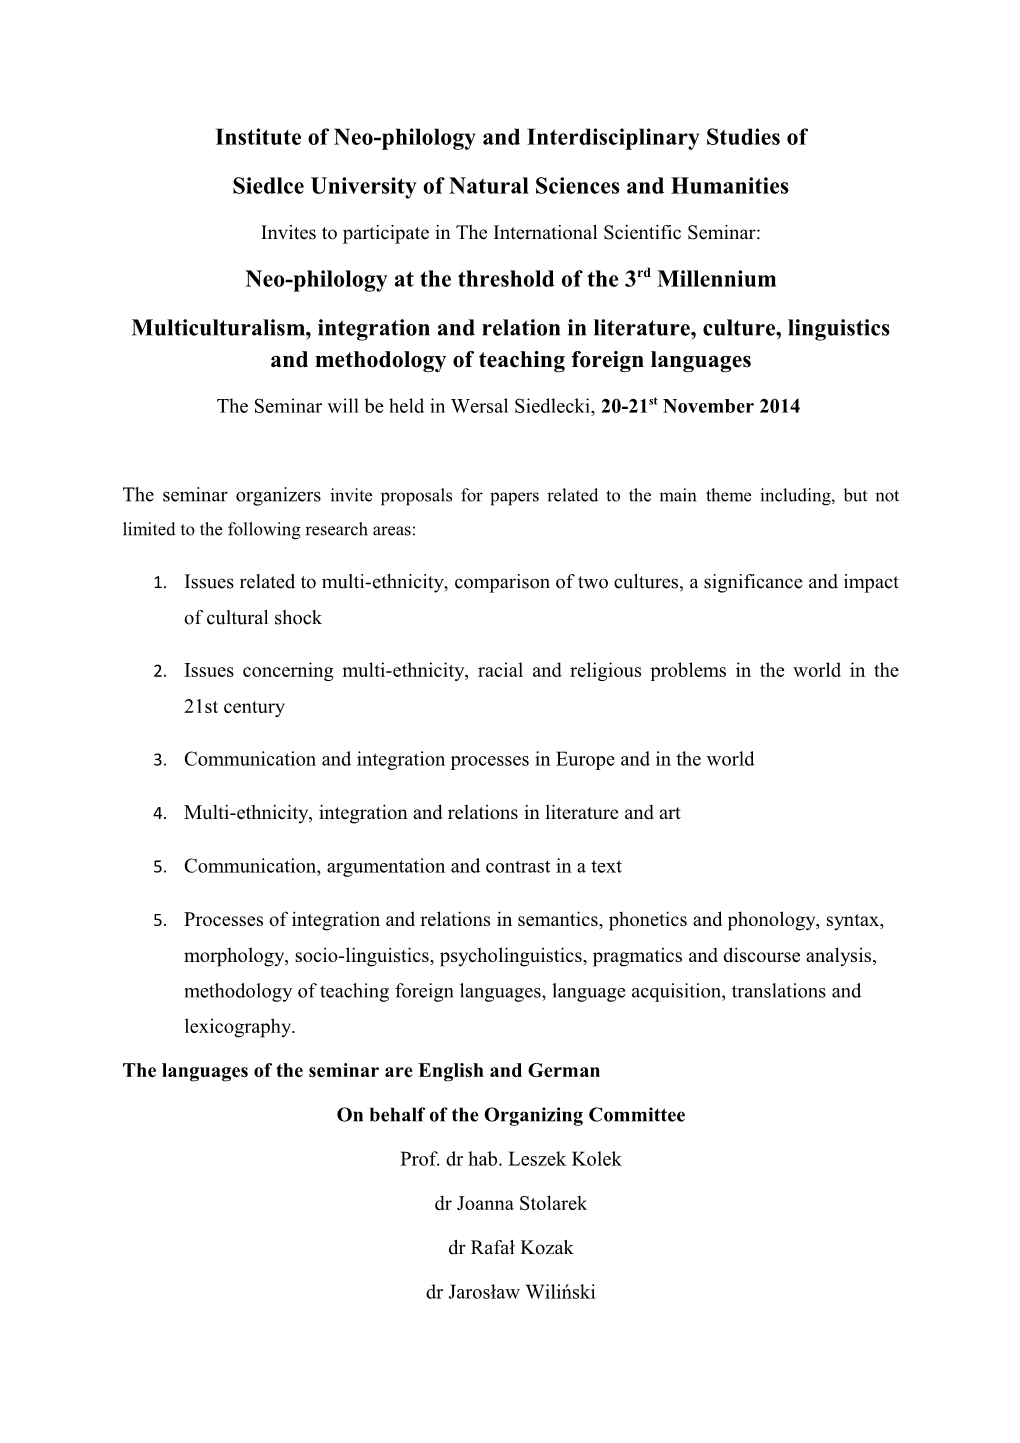 Institute of Neo-Philology and Interdisciplinary Studies Of